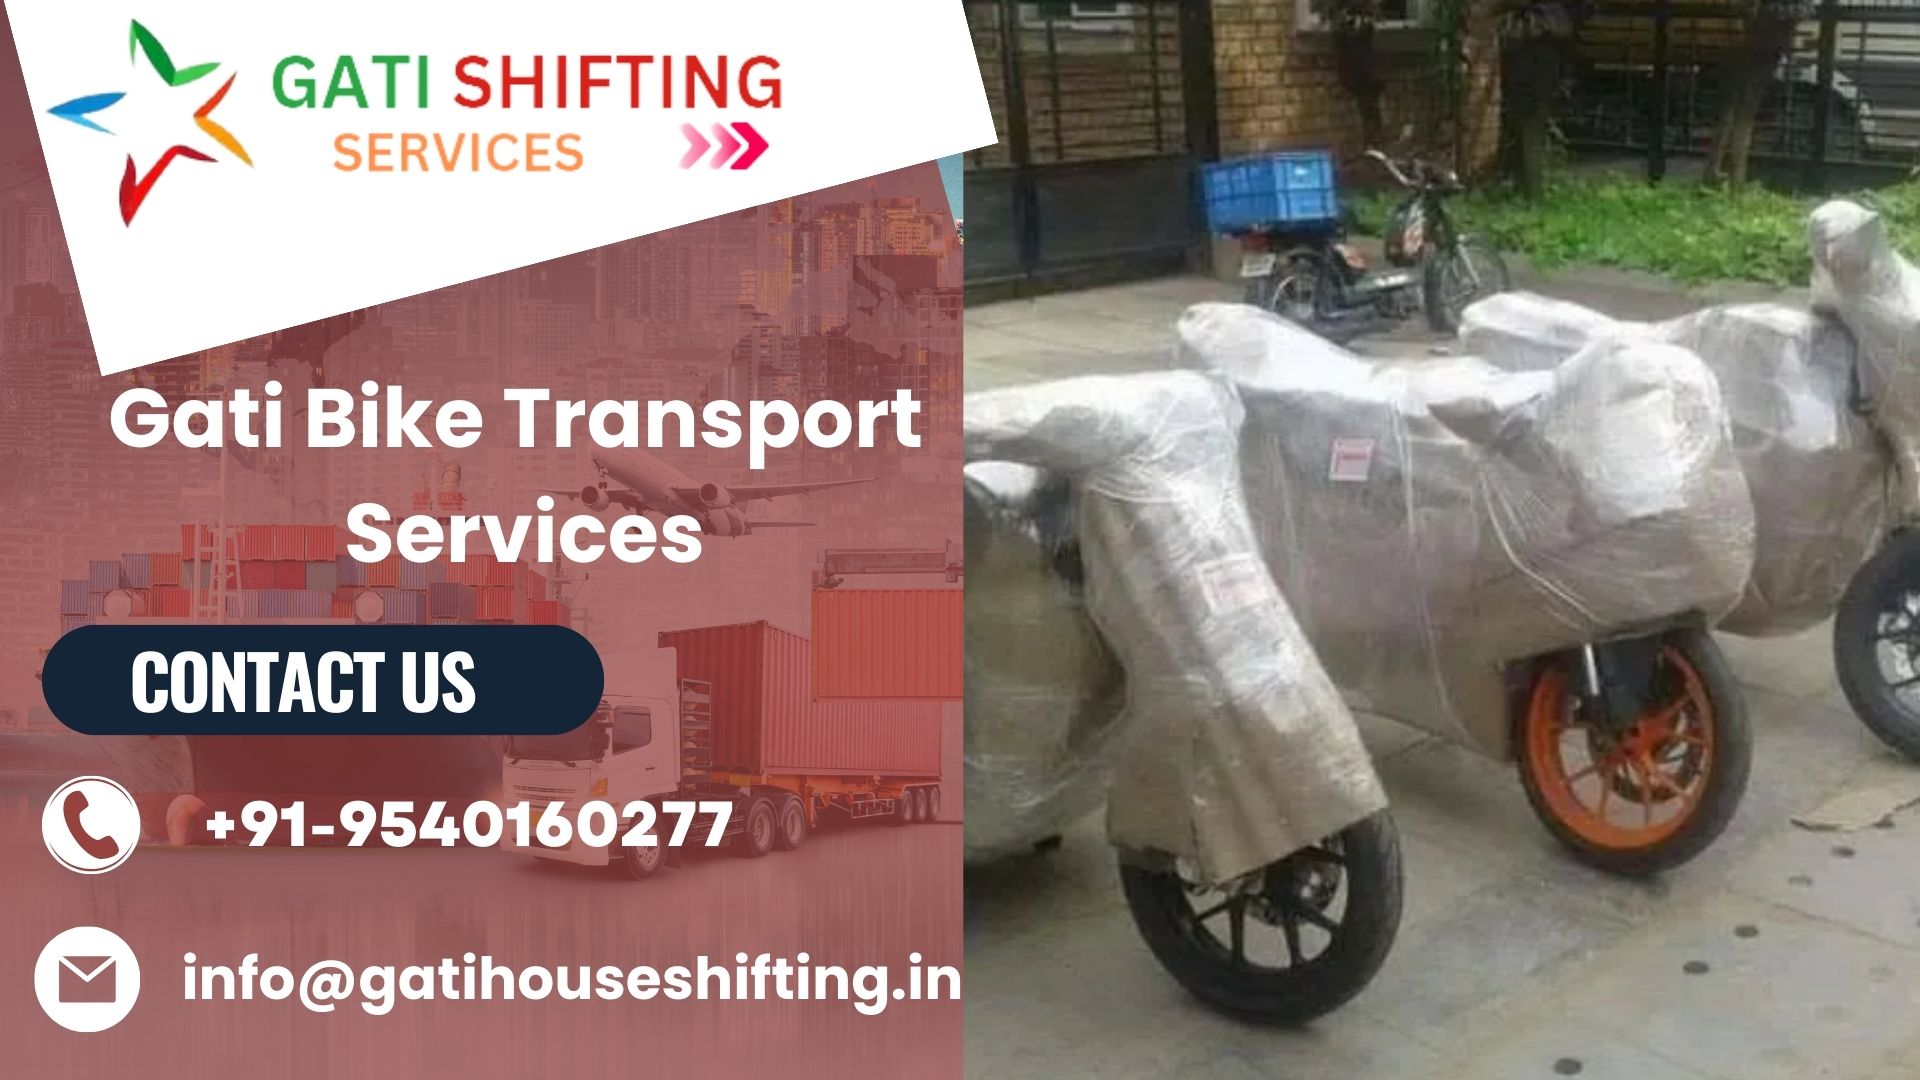 Trustworthy Bike Transport Services in Gurgaon